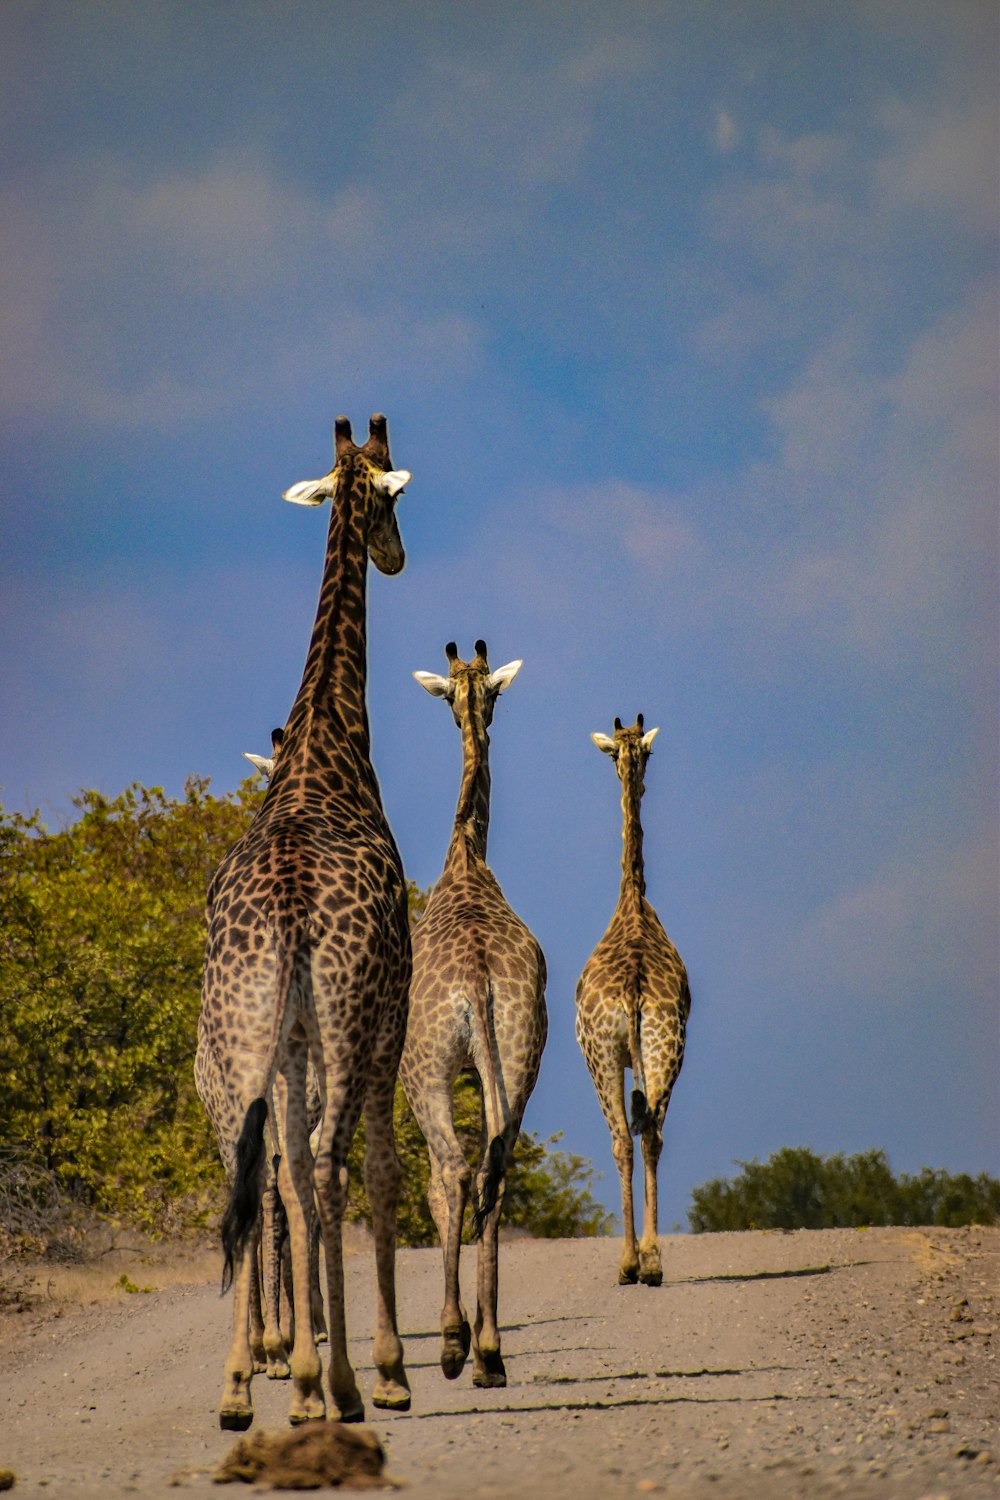 a group of giraffes walking down a dirt road